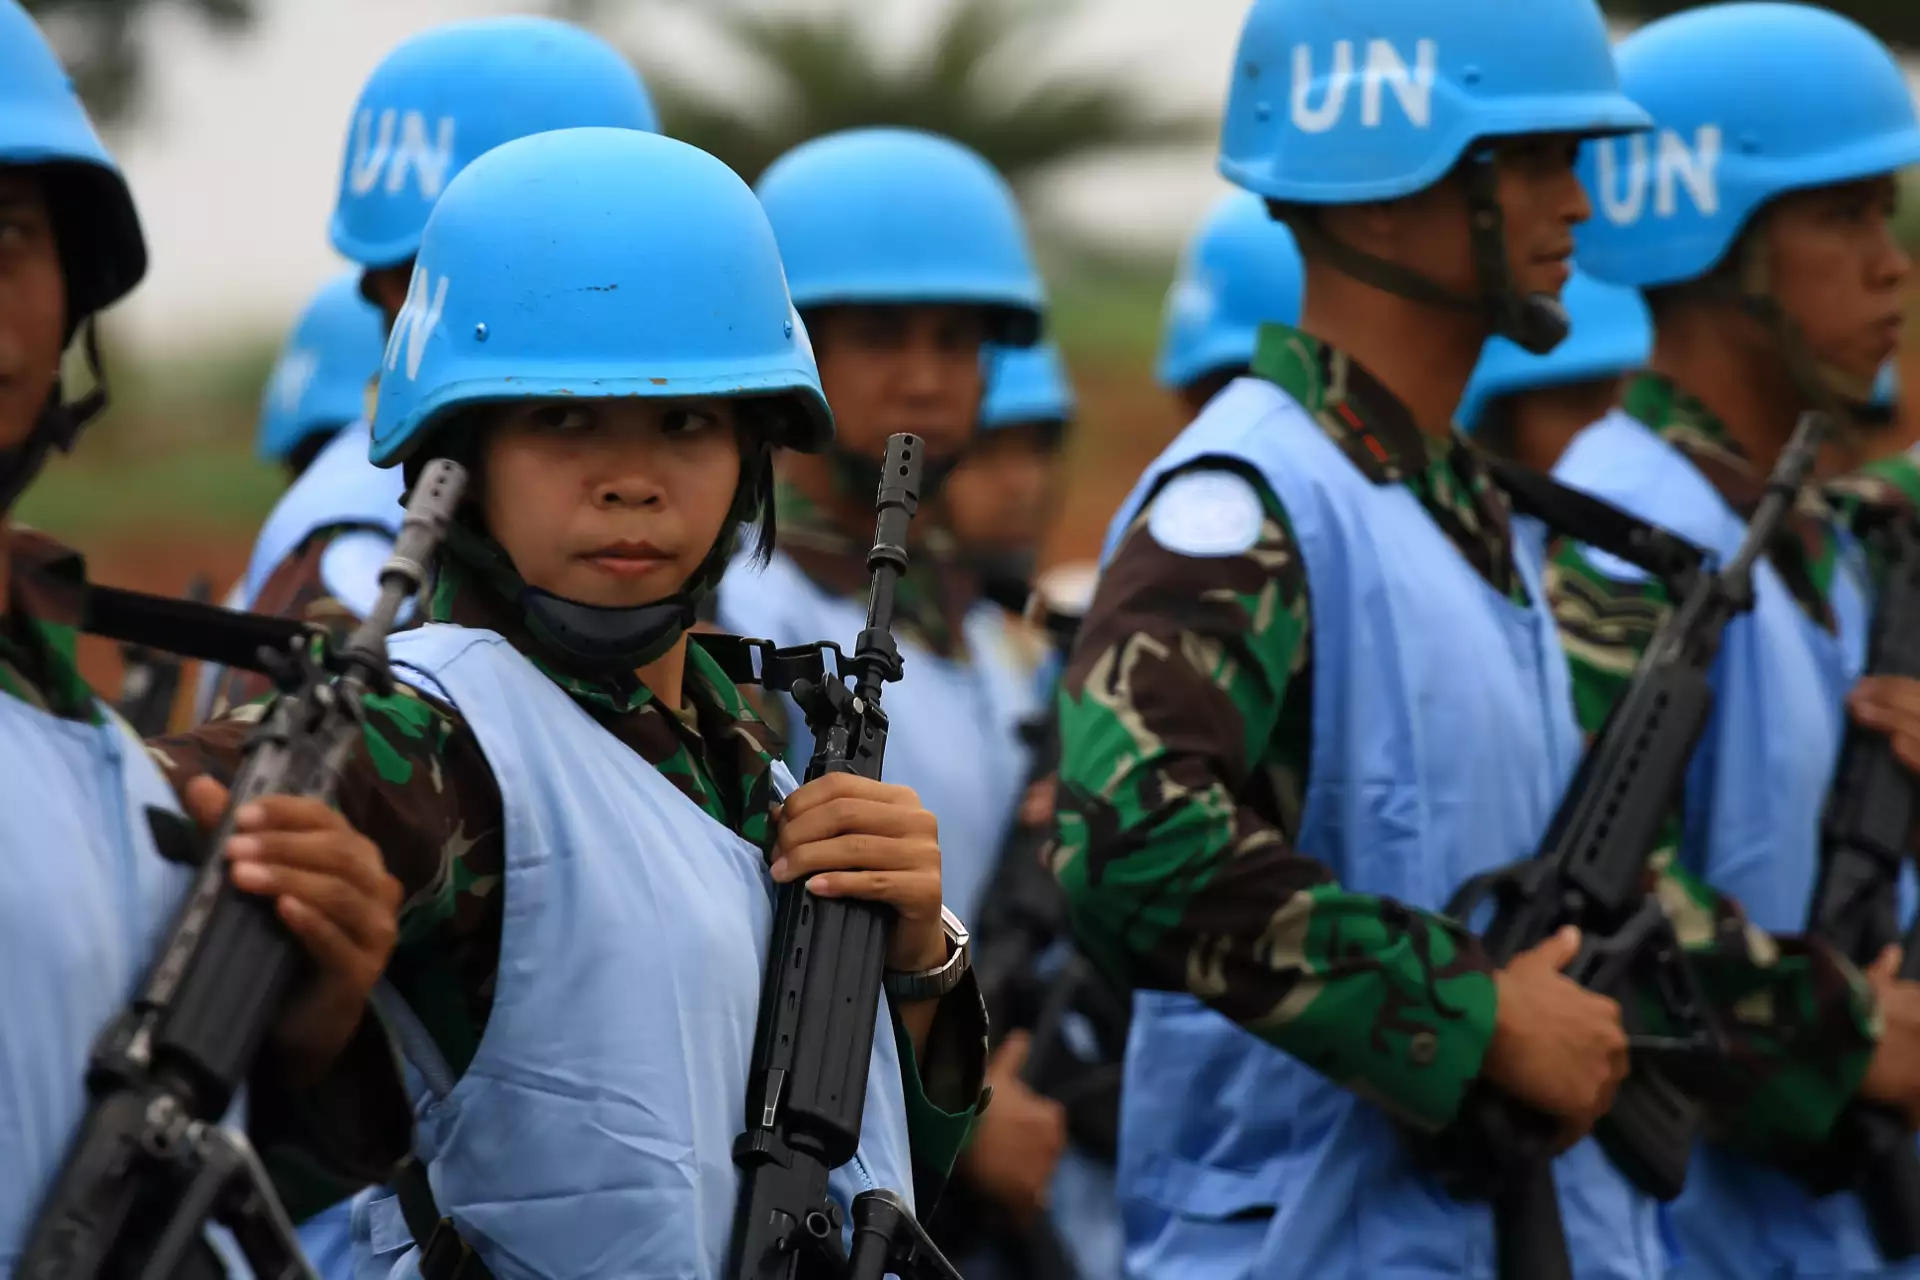 UN Peacekeeping - Better World Campaign